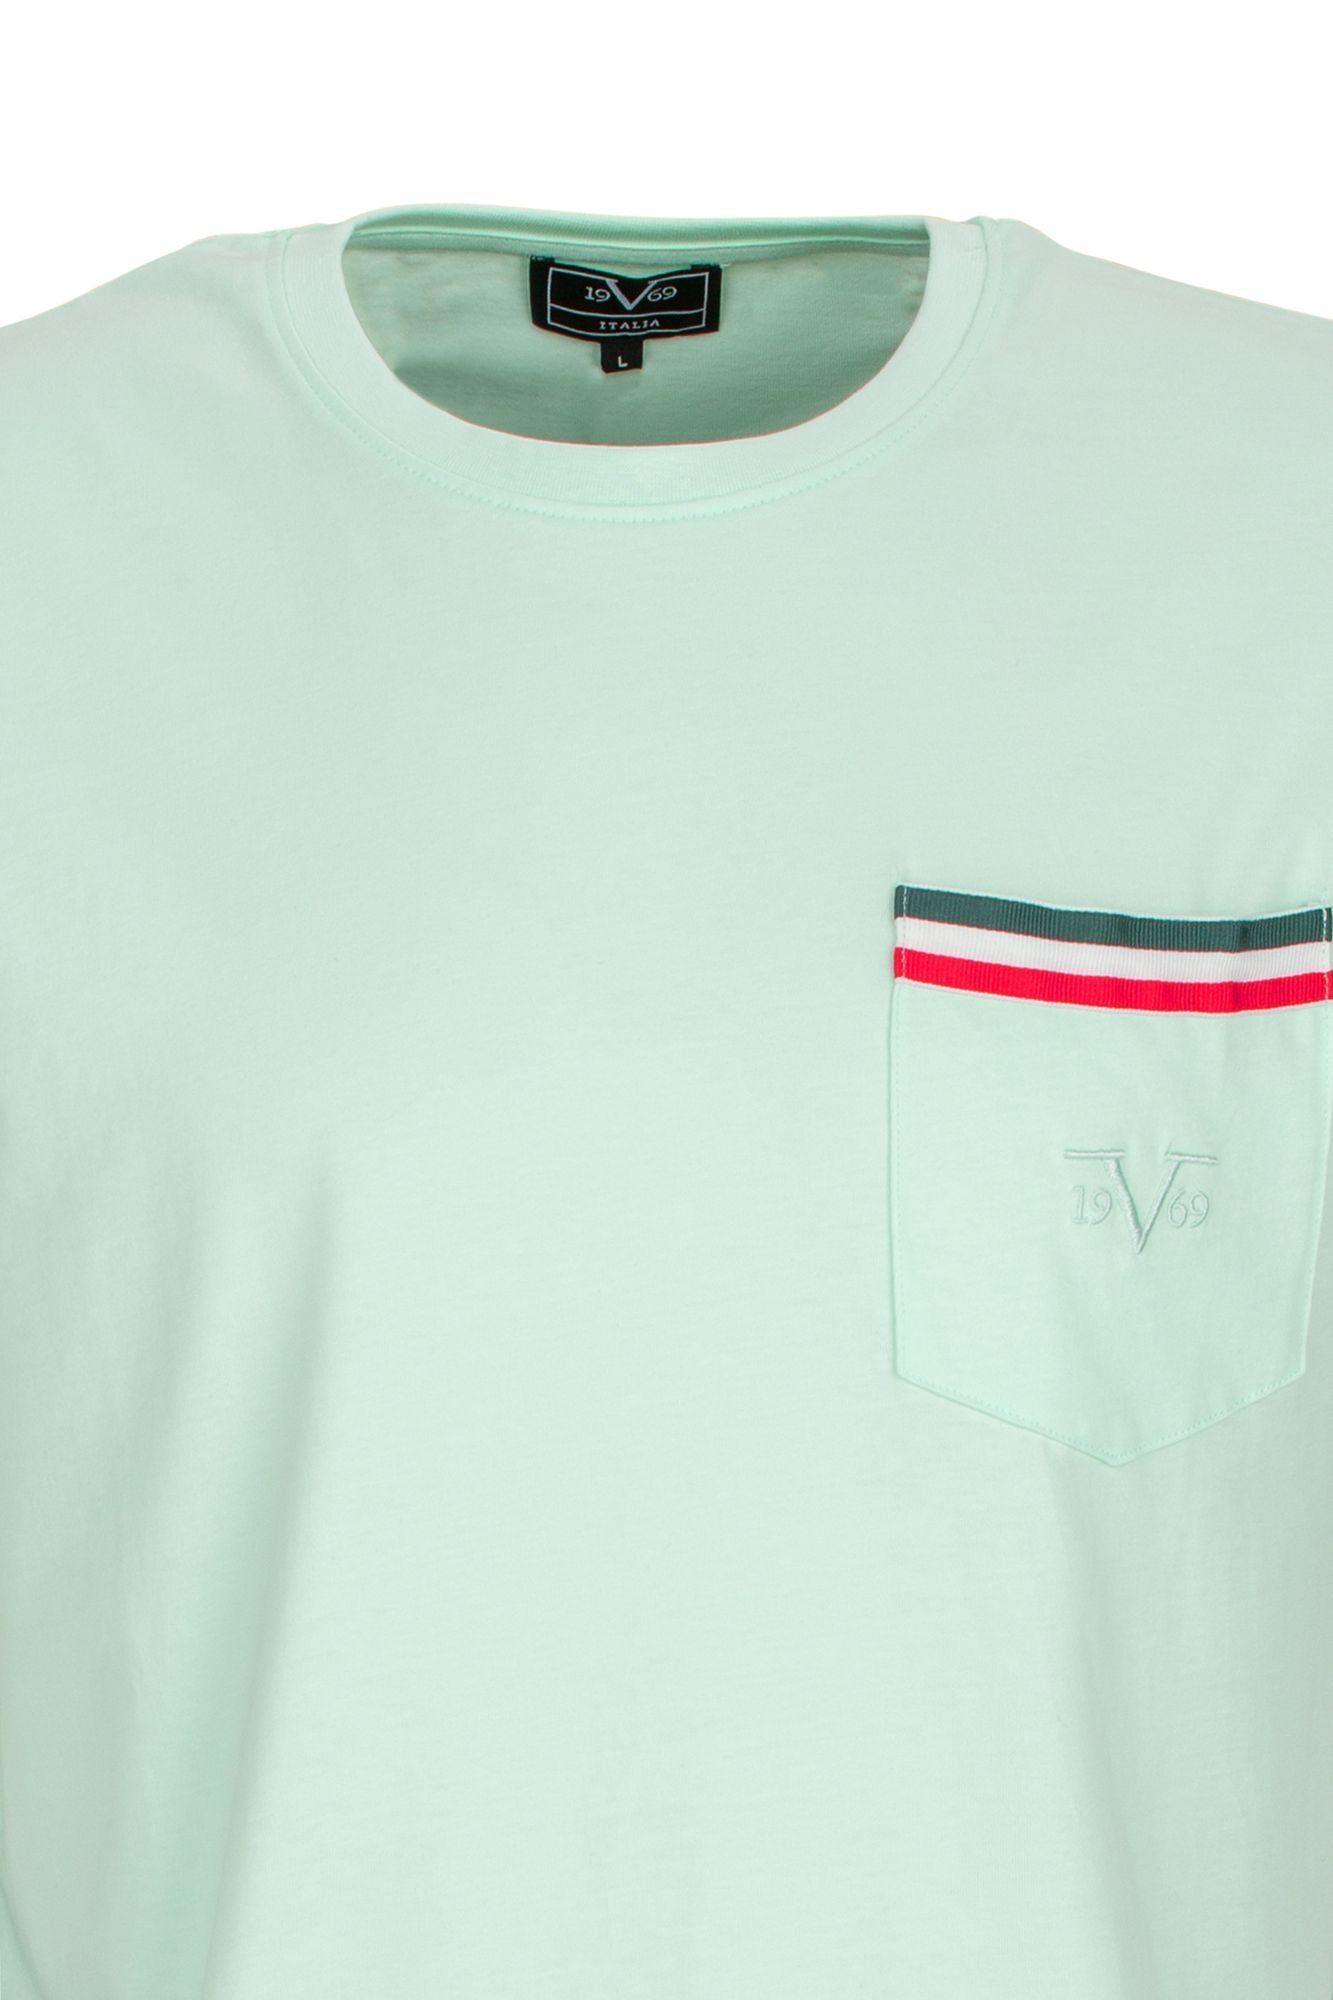 T-Shirt Federico-031 by 19V69 Italia Versace